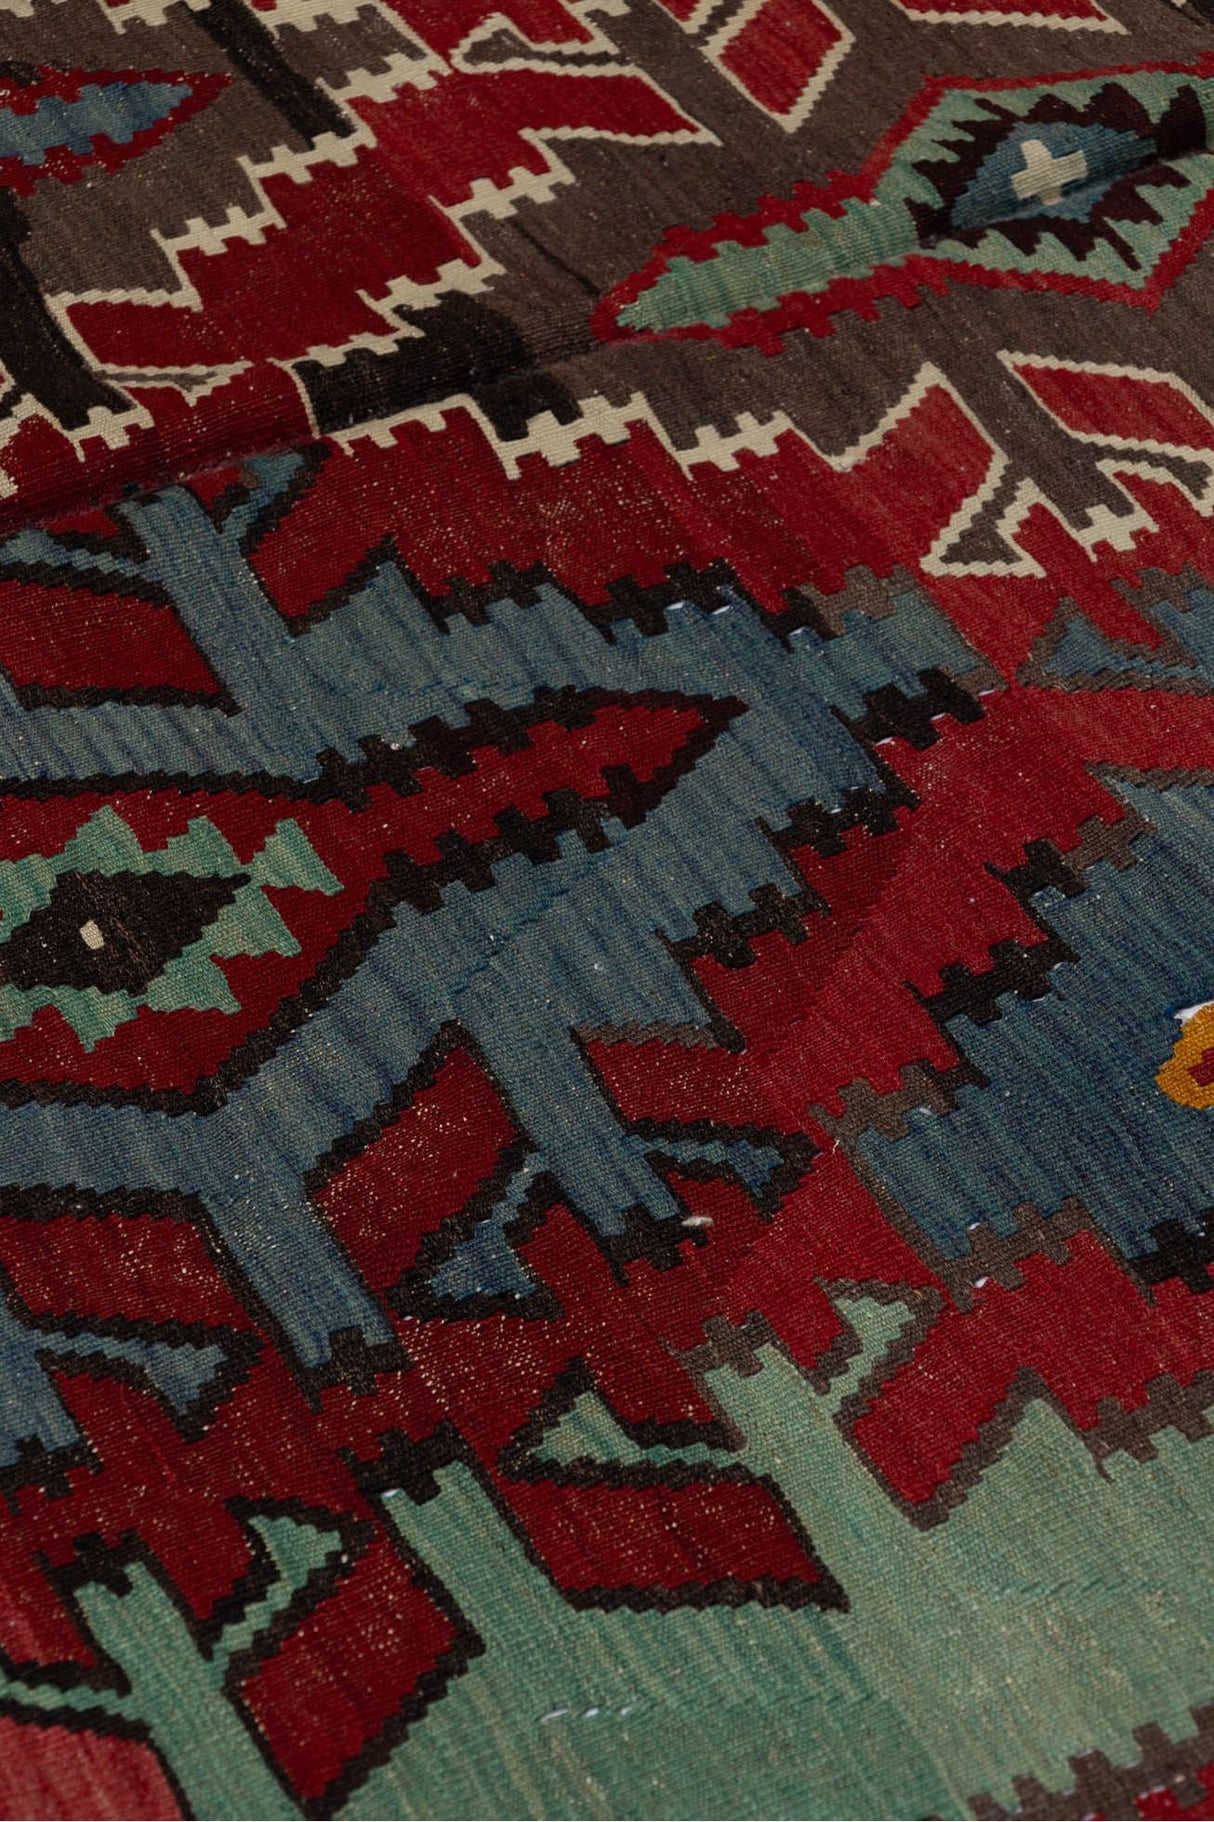 #Turkish_Carpets_Rugs# #Modern_Carpets# #Abrash_Carpets#Caucasion679184093216-176X331